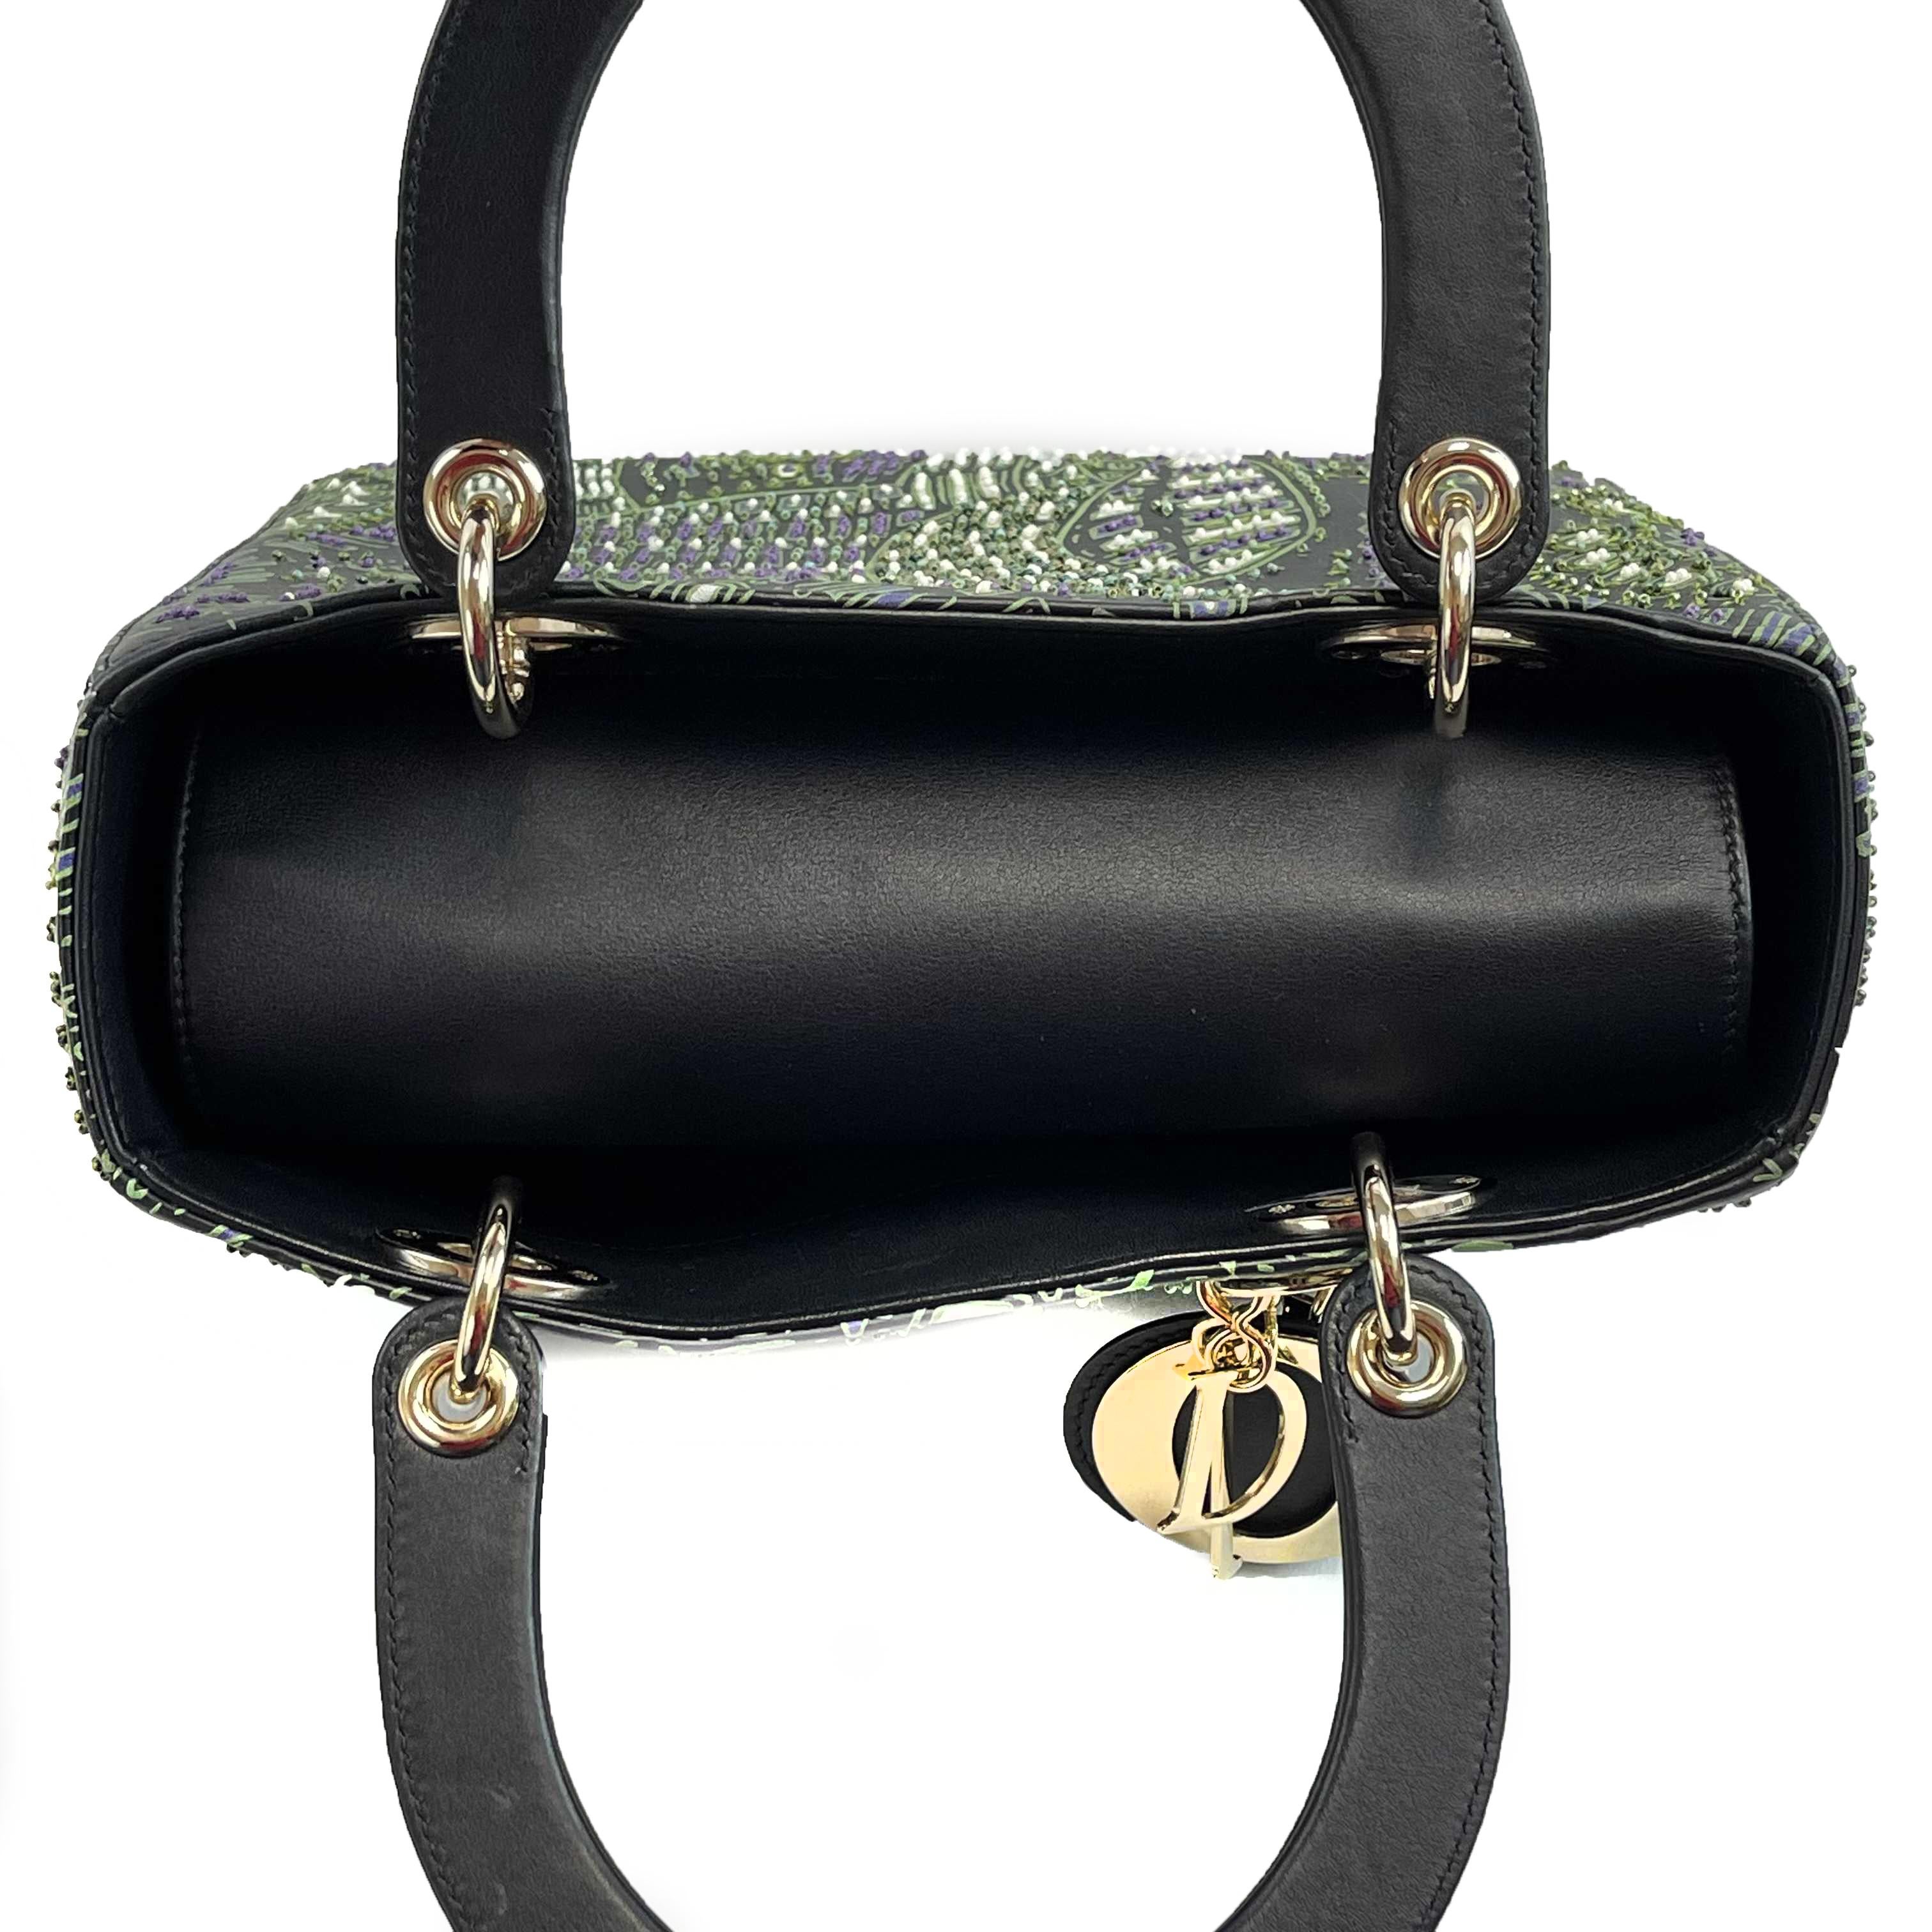 Christian Dior - Sac à main « Lady Dior » brodé d'animaux noirs et verts, taille moyenne 2